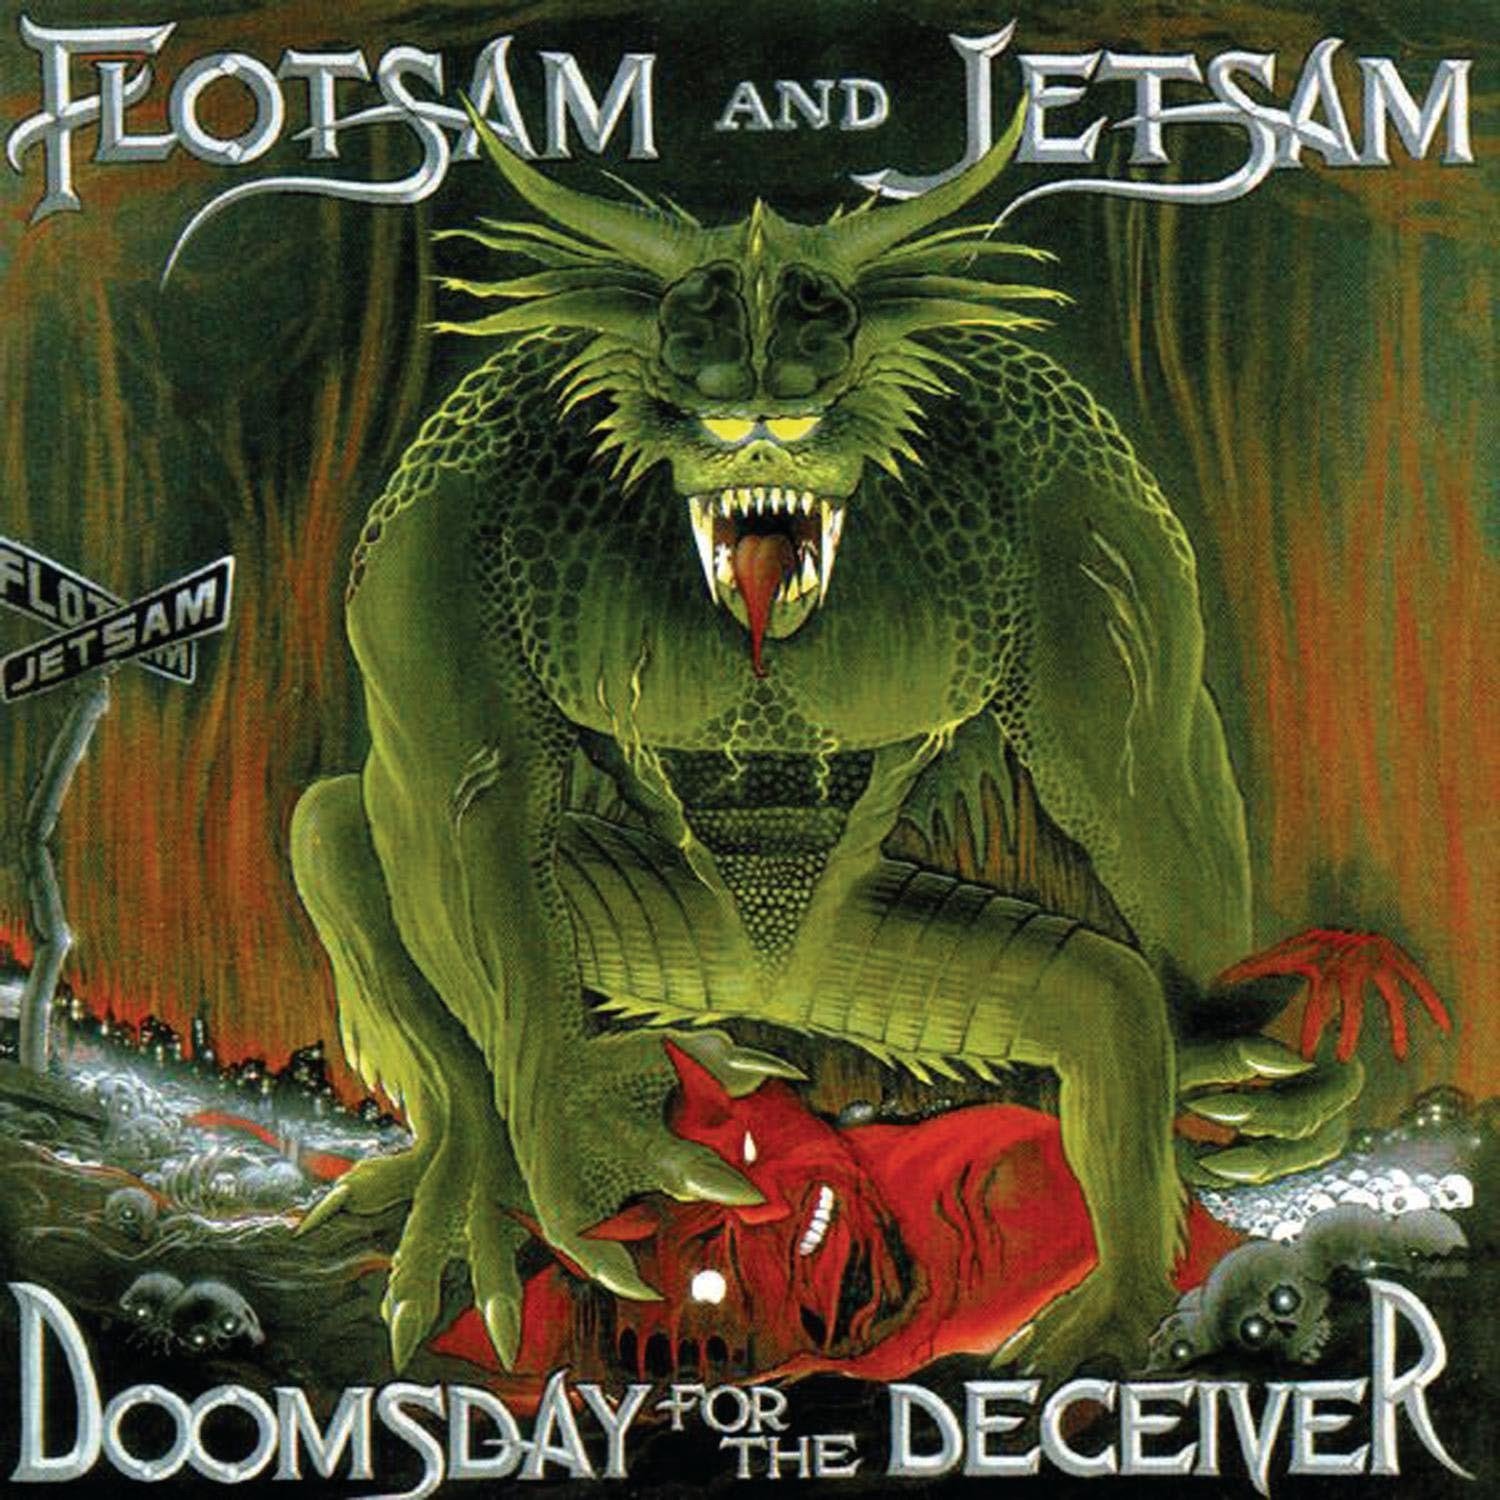 CD Shop - FLOTSAM AND JETSAM DOOMSDAY FOR THE DECEIVER